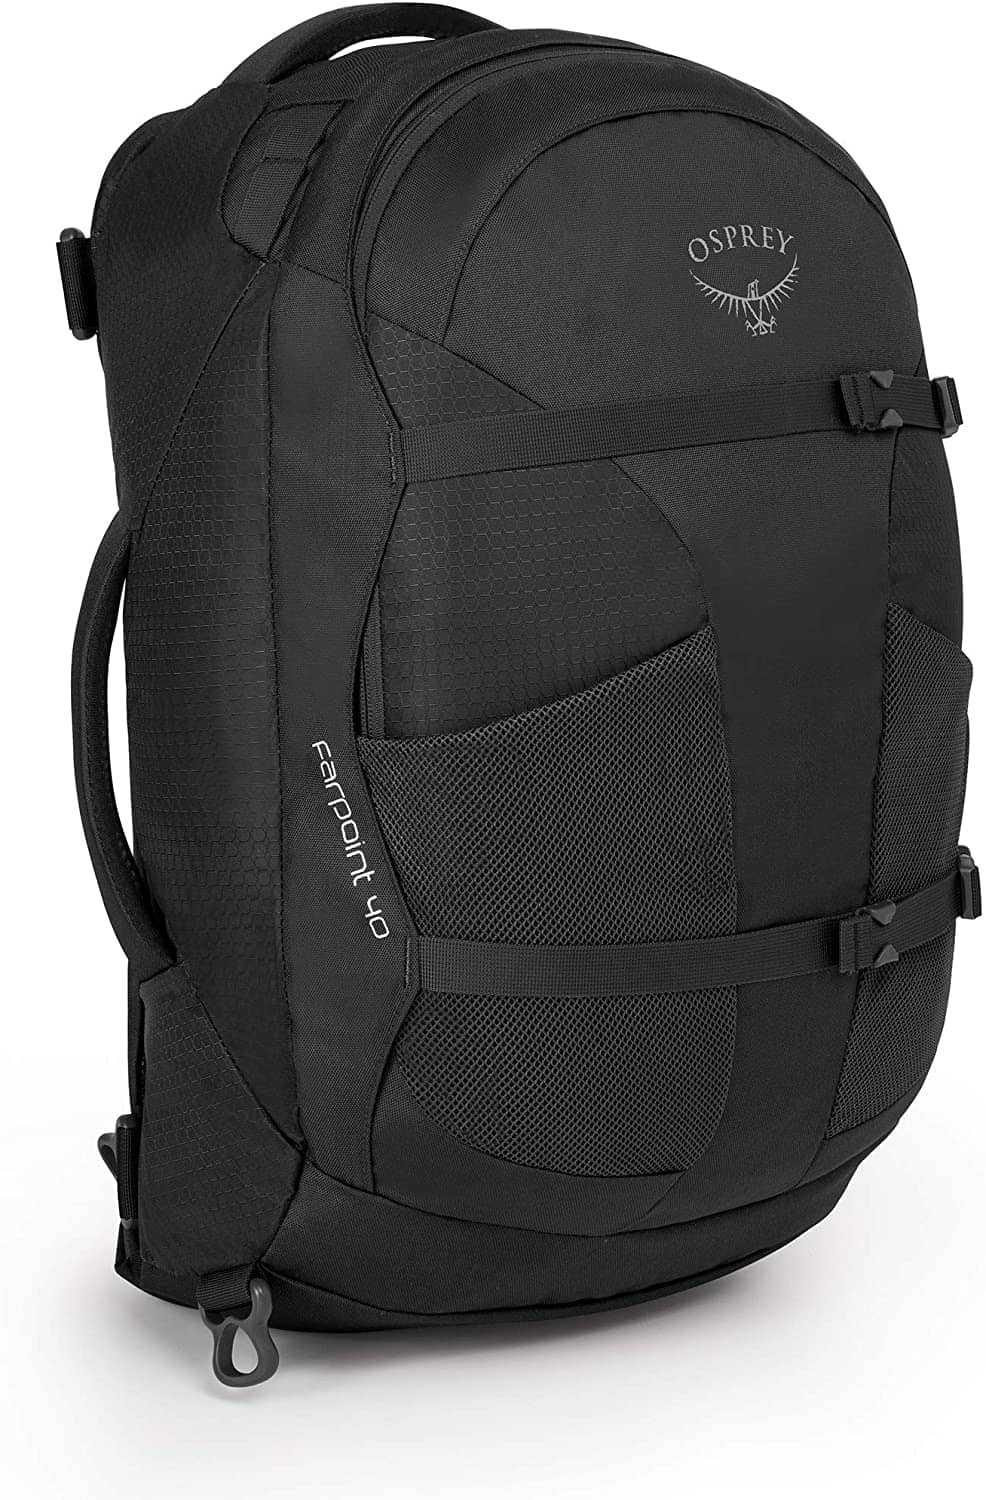 Osprey Farpoint 40 Men's Travel Backpack